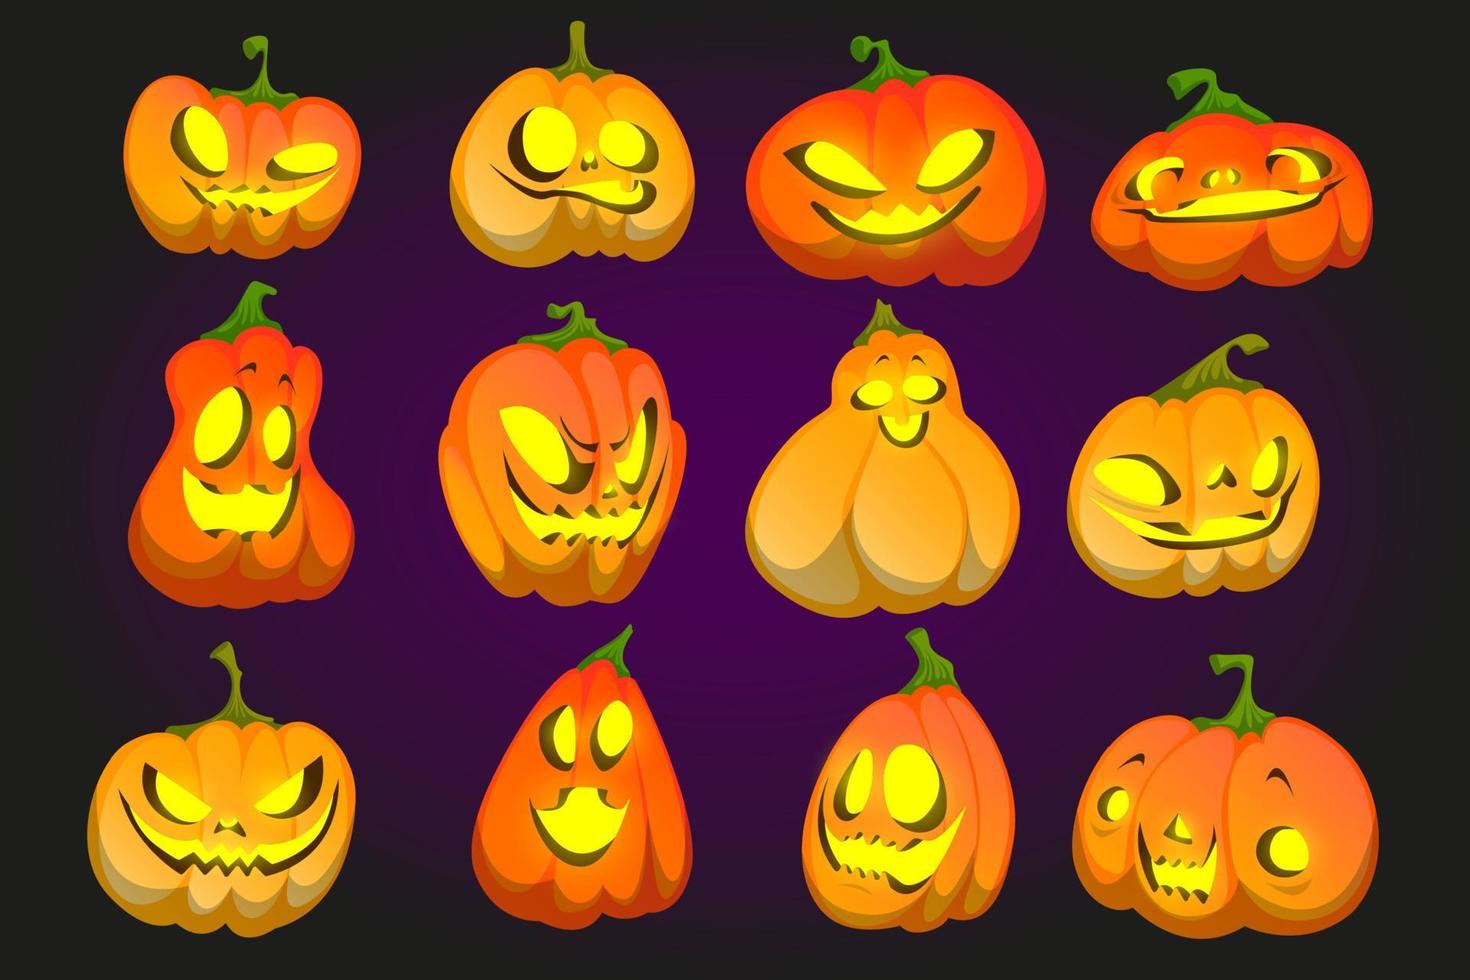 caras graciosas de calabaza de halloween, conjunto de jack-o-lanterns vector